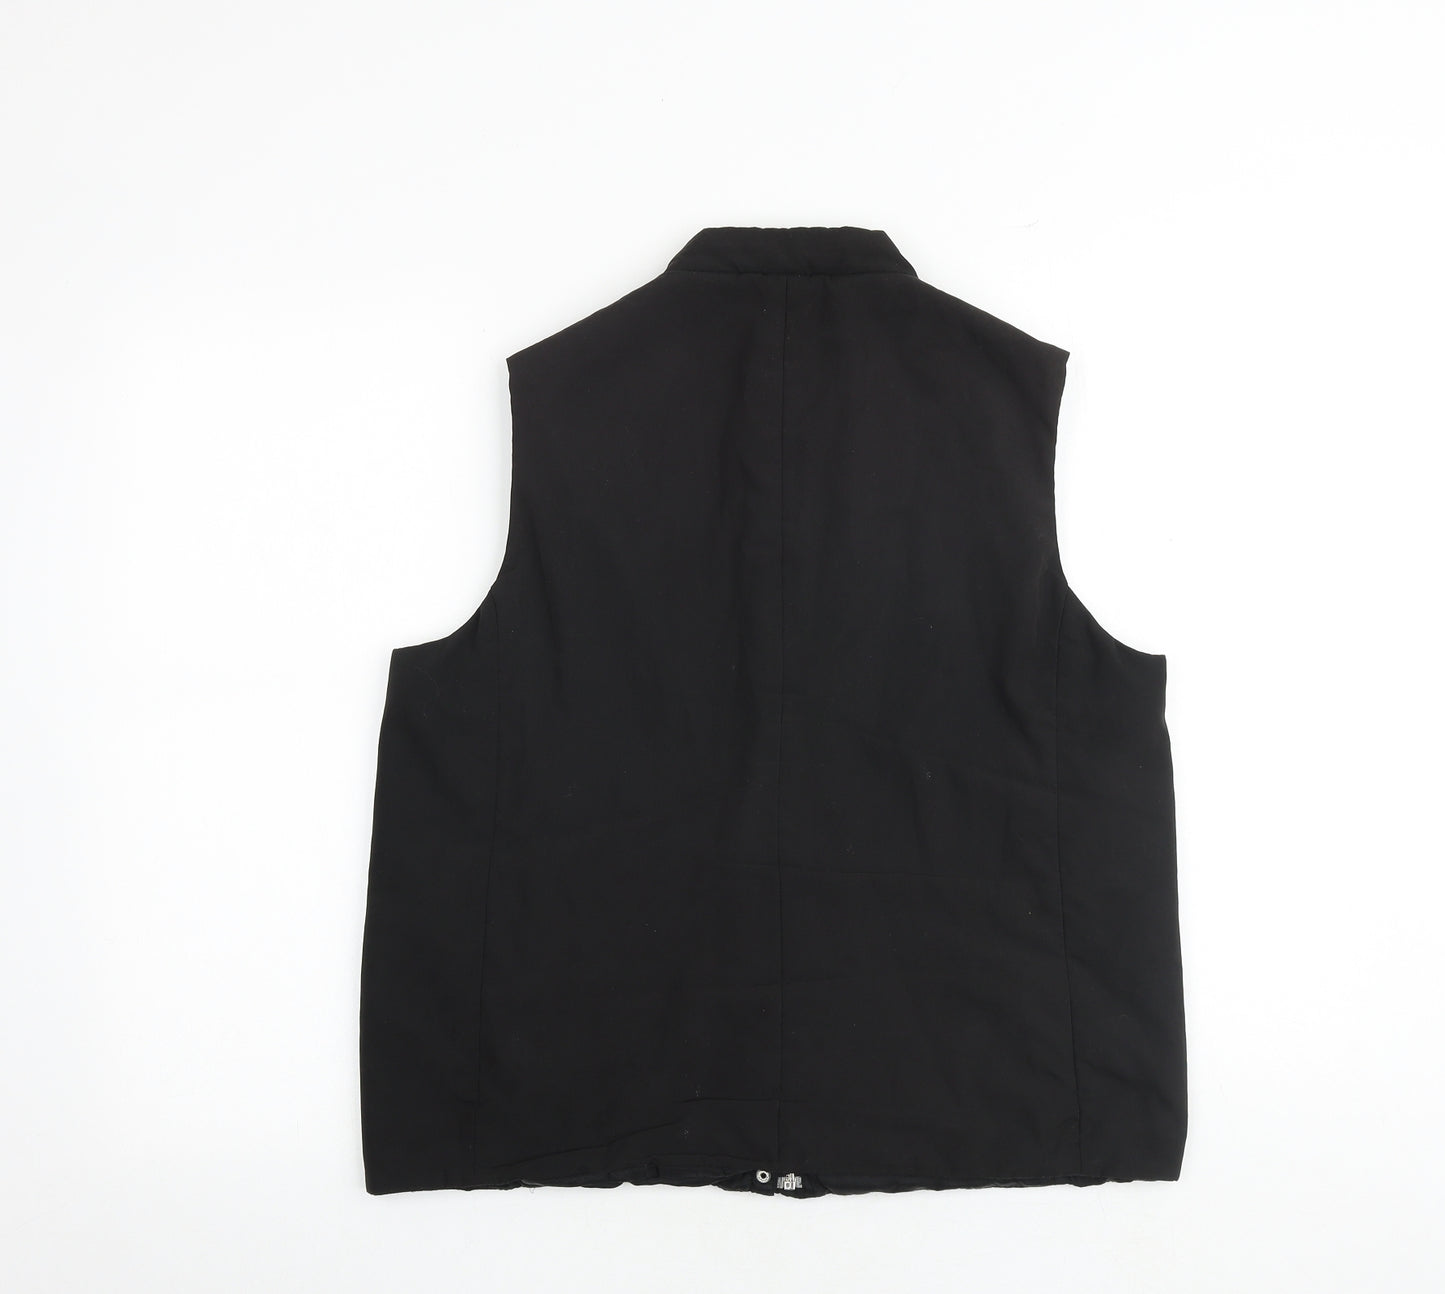 BHS Womens Black Gilet Jacket Size 14 Zip